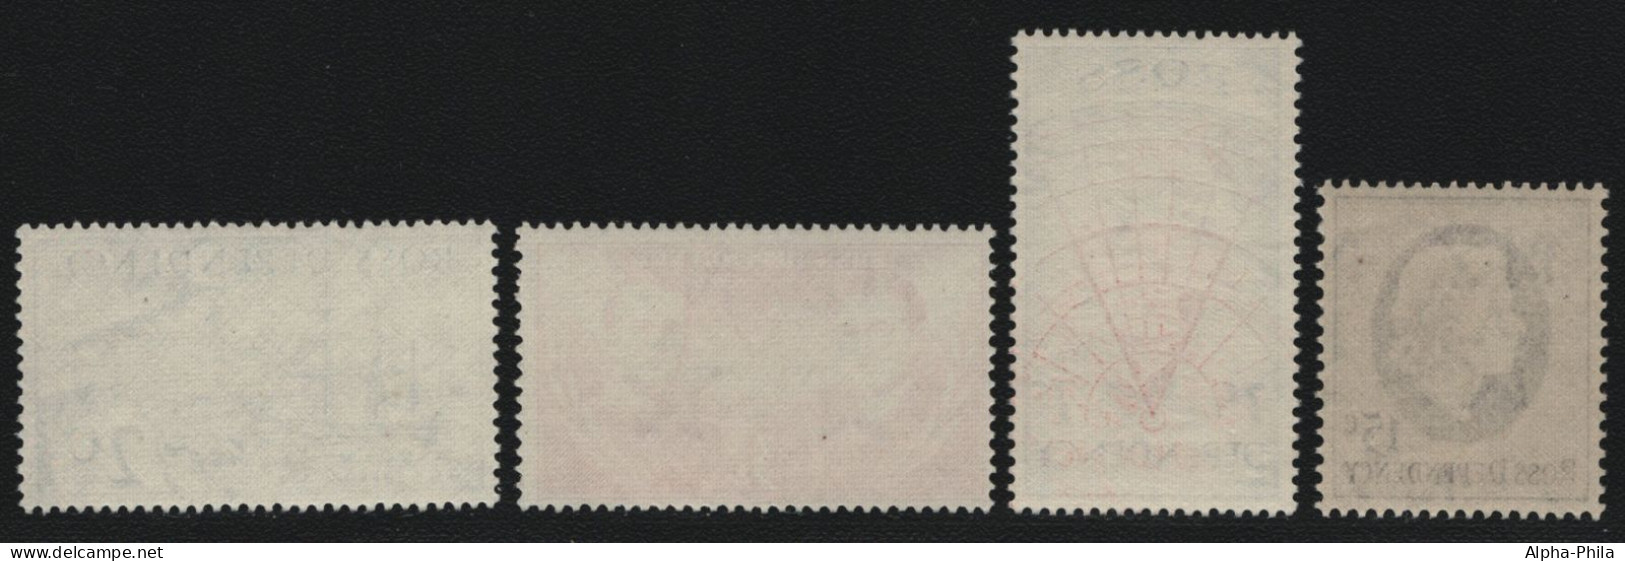 Ross-Gebiet 1967 - Mi-Nr. 5-8 ** - MNH - Freimarken / Definitives (II) - Nuevos